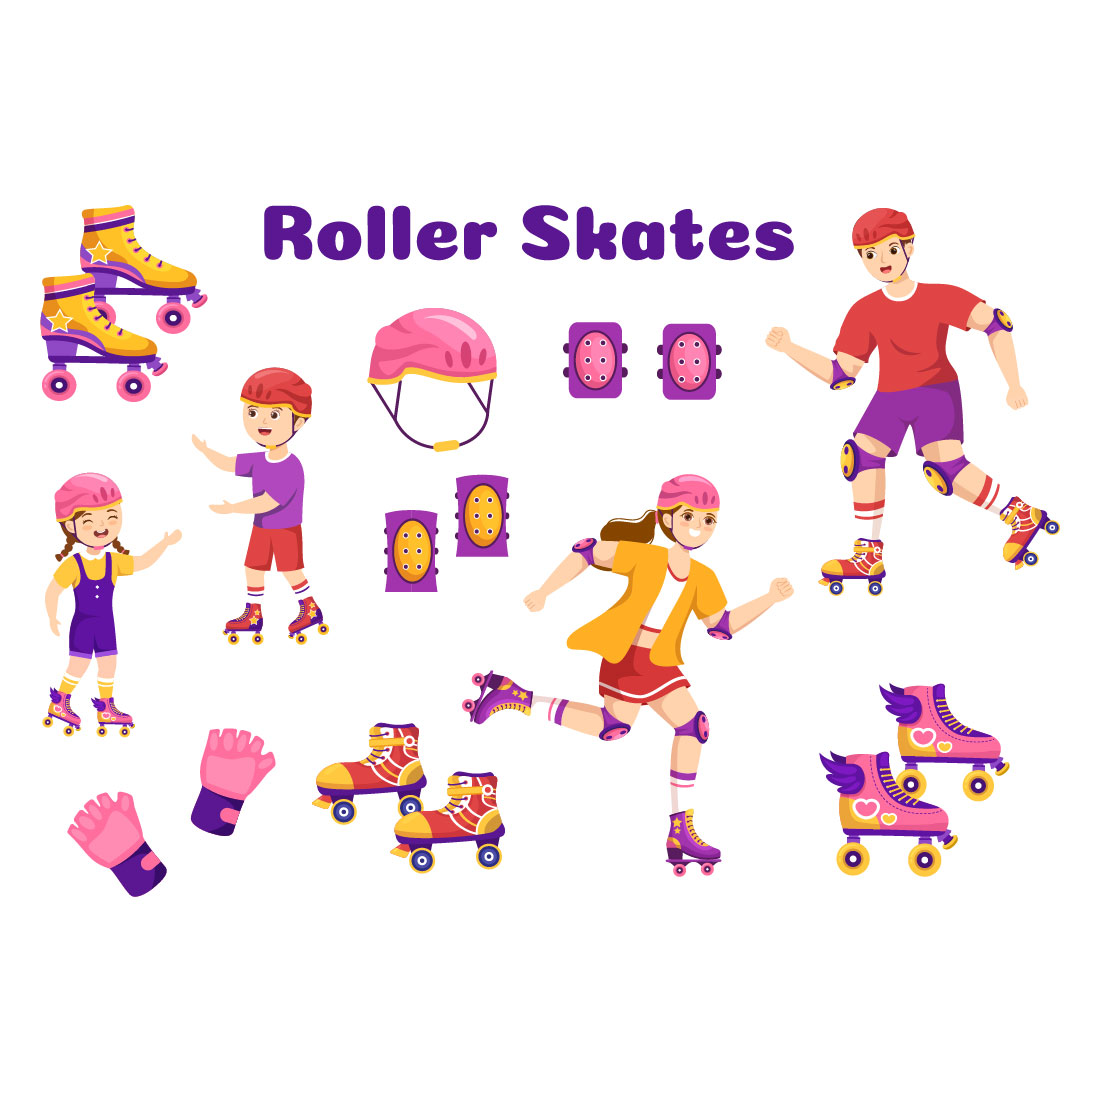 Riding Roller Skates Graphics Design cover image.